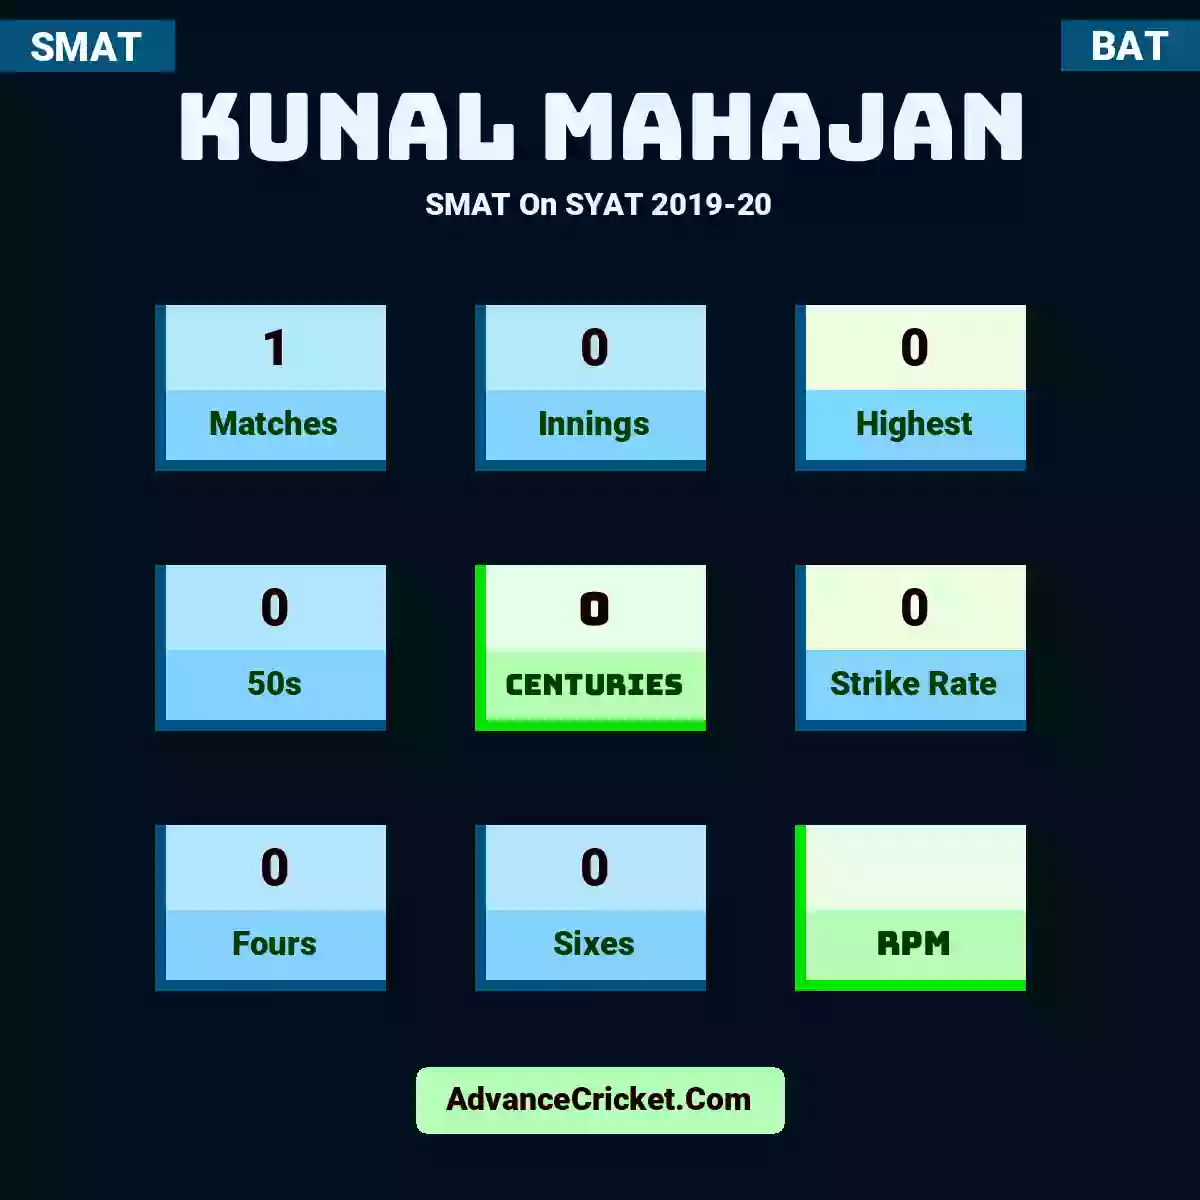 Kunal Mahajan SMAT  On SYAT 2019-20, Kunal Mahajan played 1 matches, scored 0 runs as highest, 0 half-centuries, and 0 centuries, with a strike rate of 0. K.Mahajan hit 0 fours and 0 sixes.